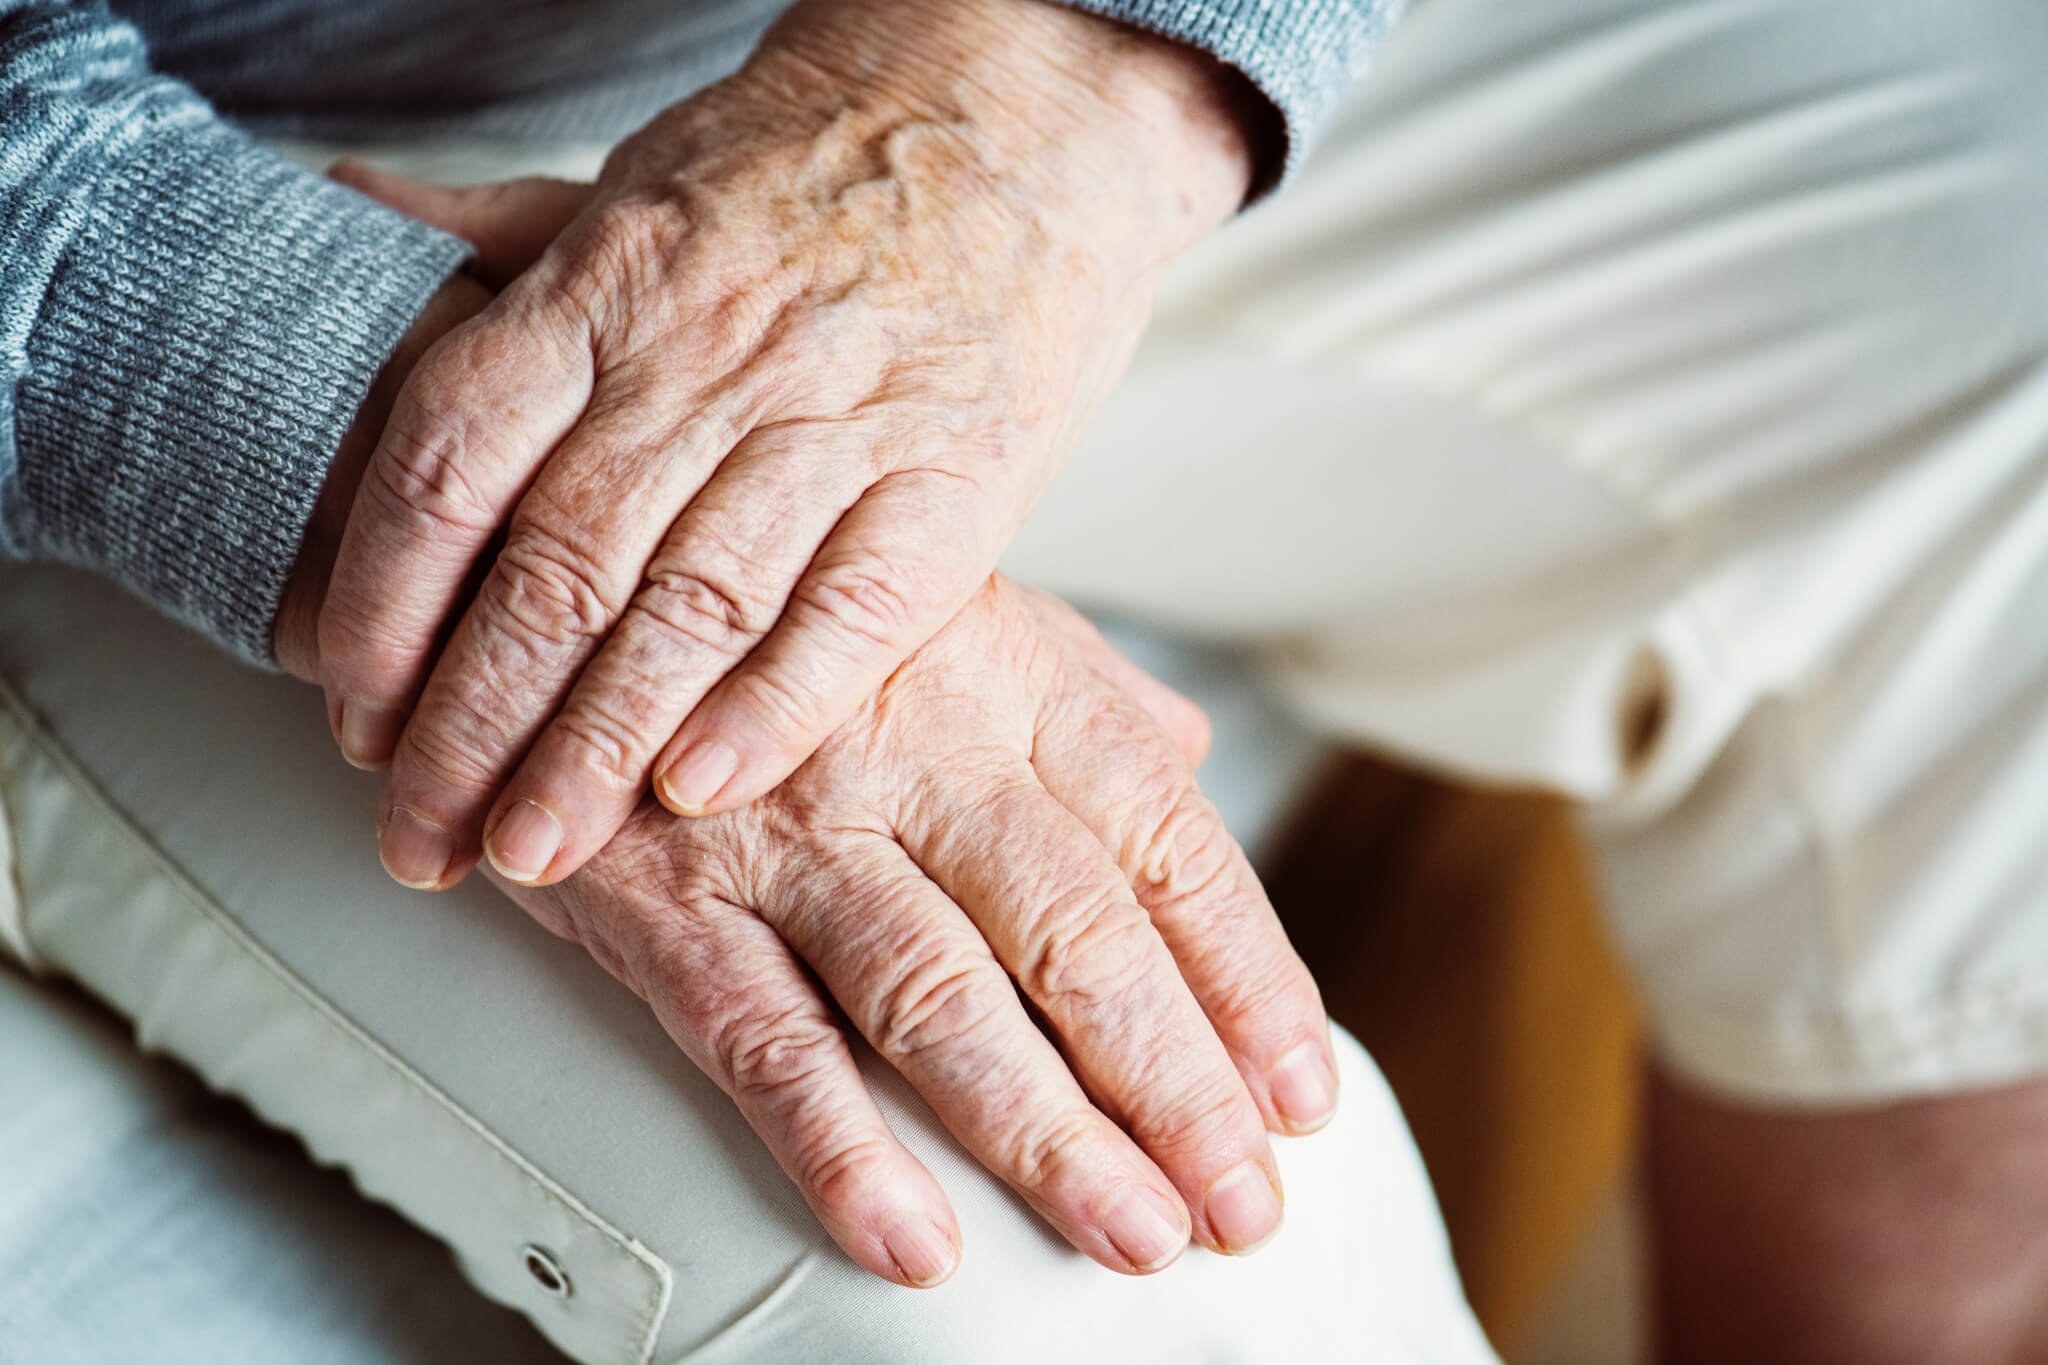 Elderly, elderly hands